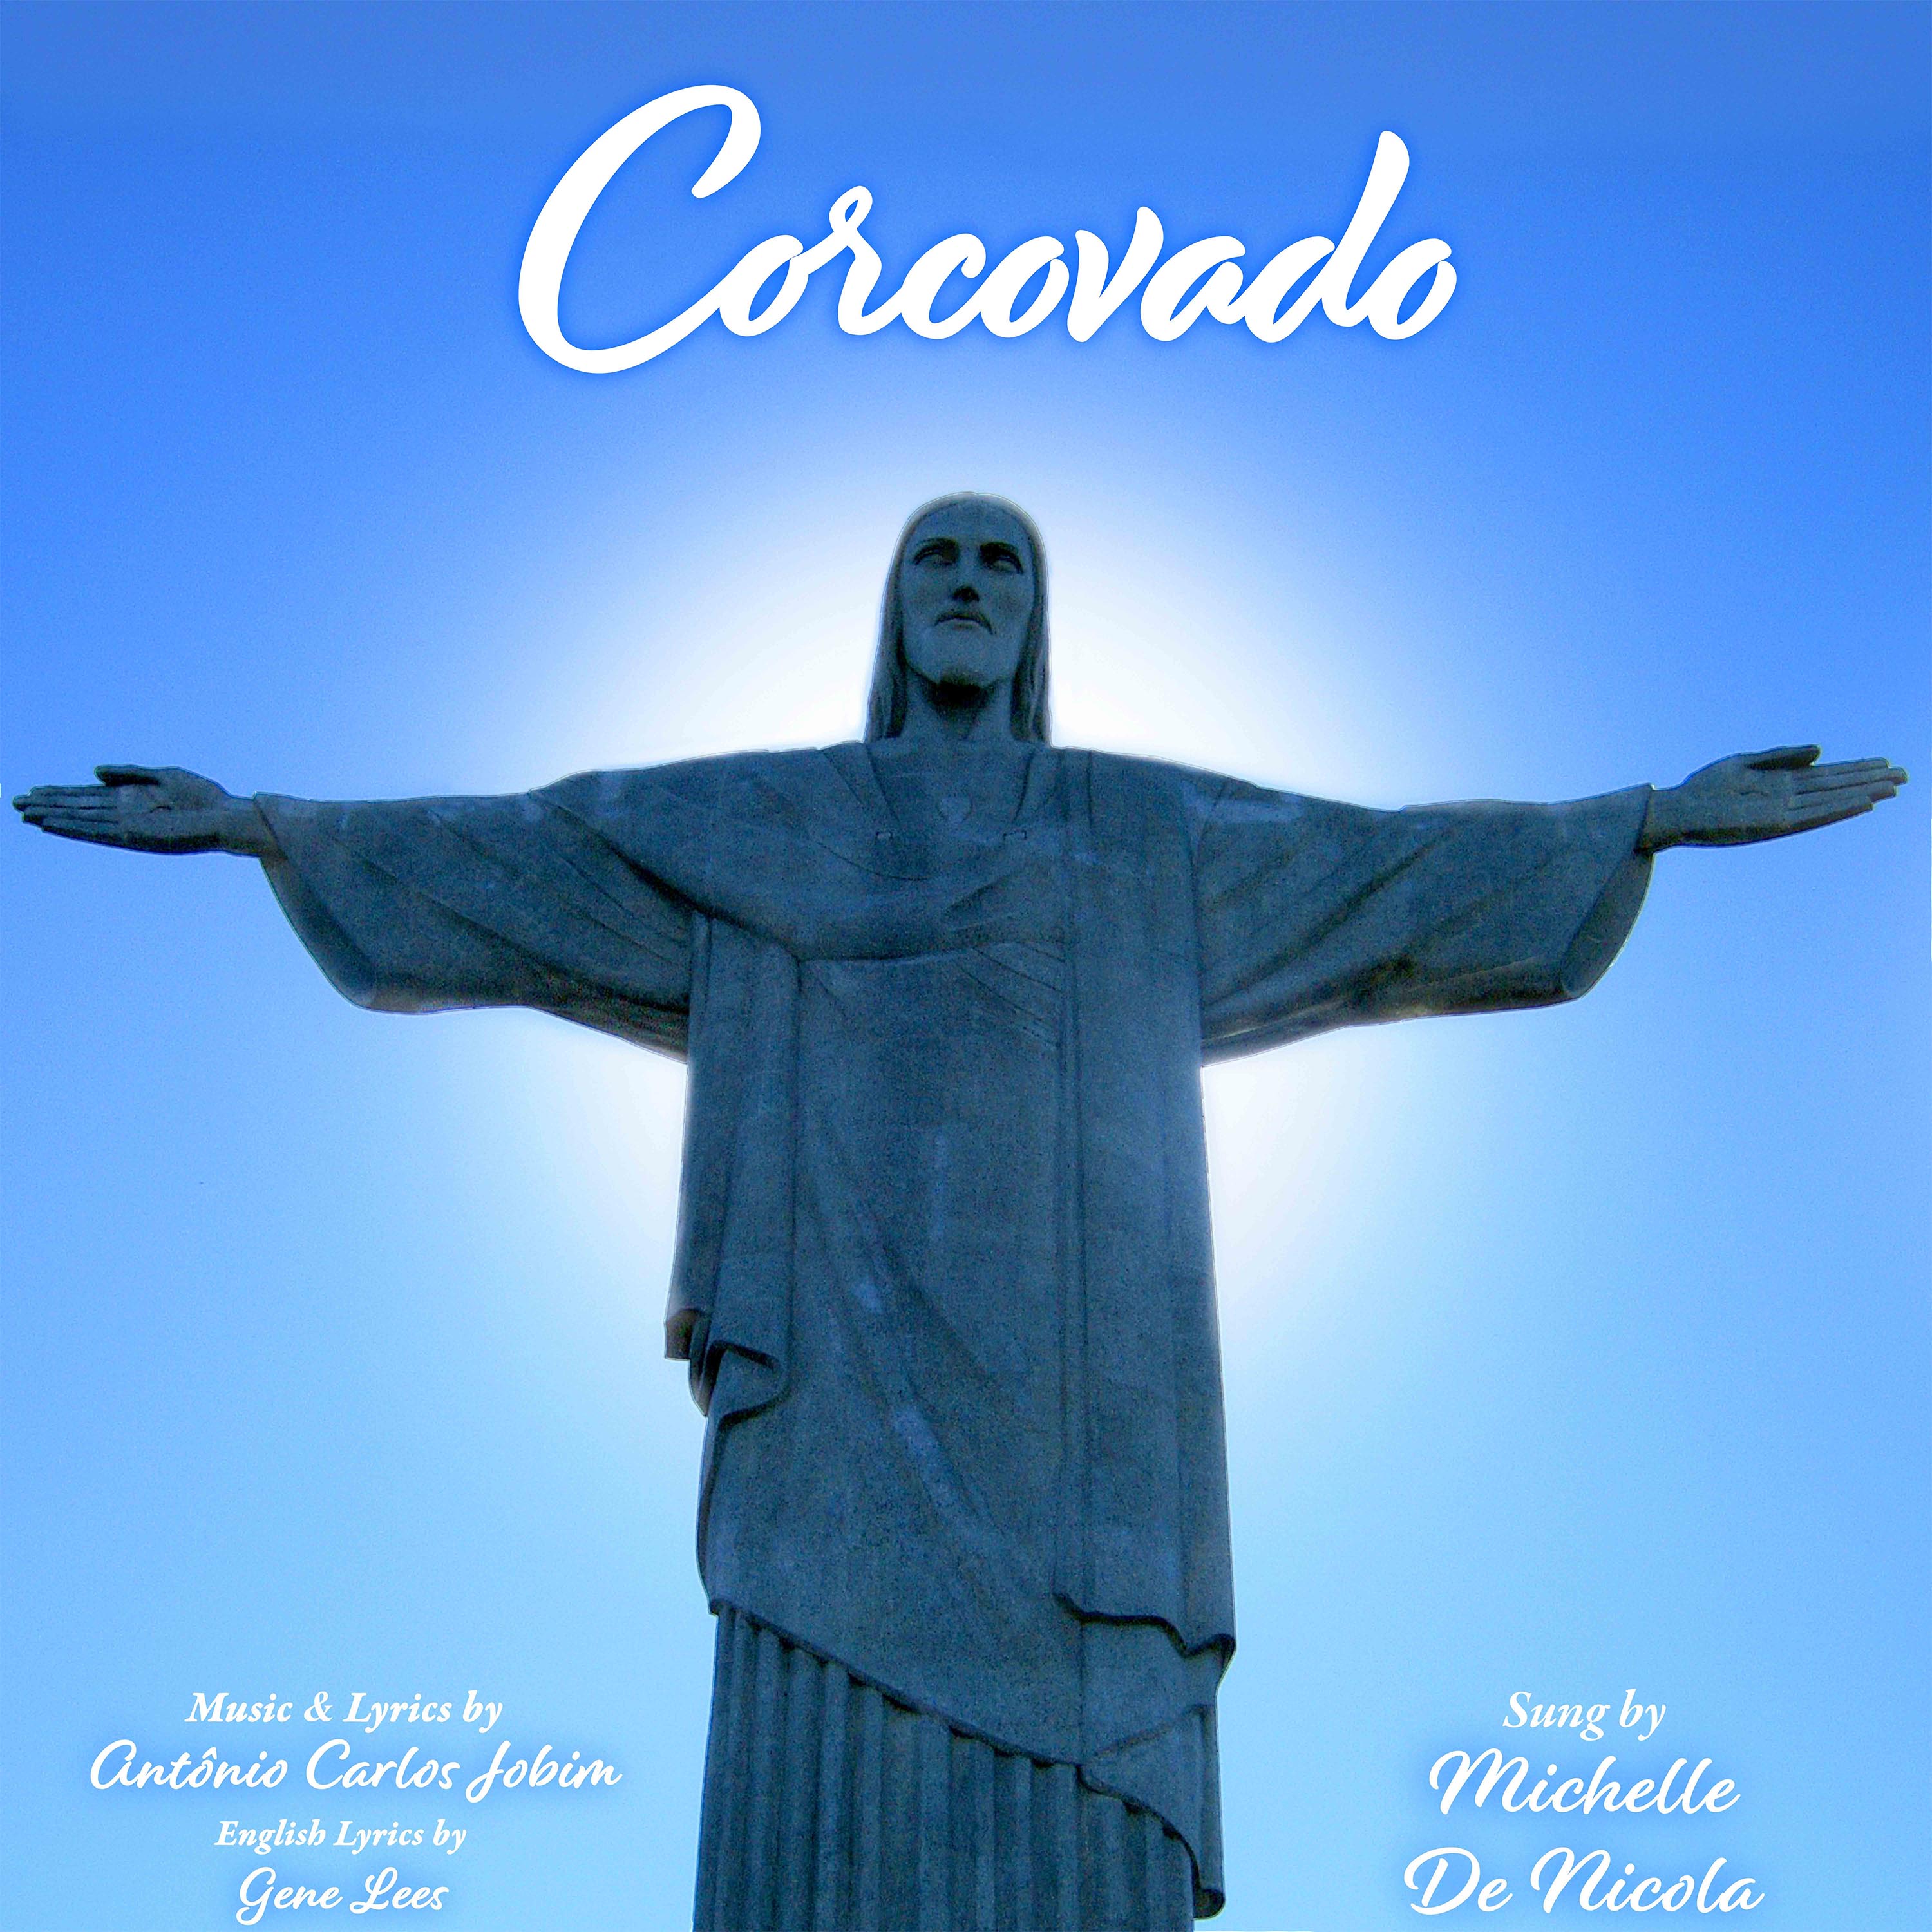 song art for Corcovado, sung by Michelle De Nicola